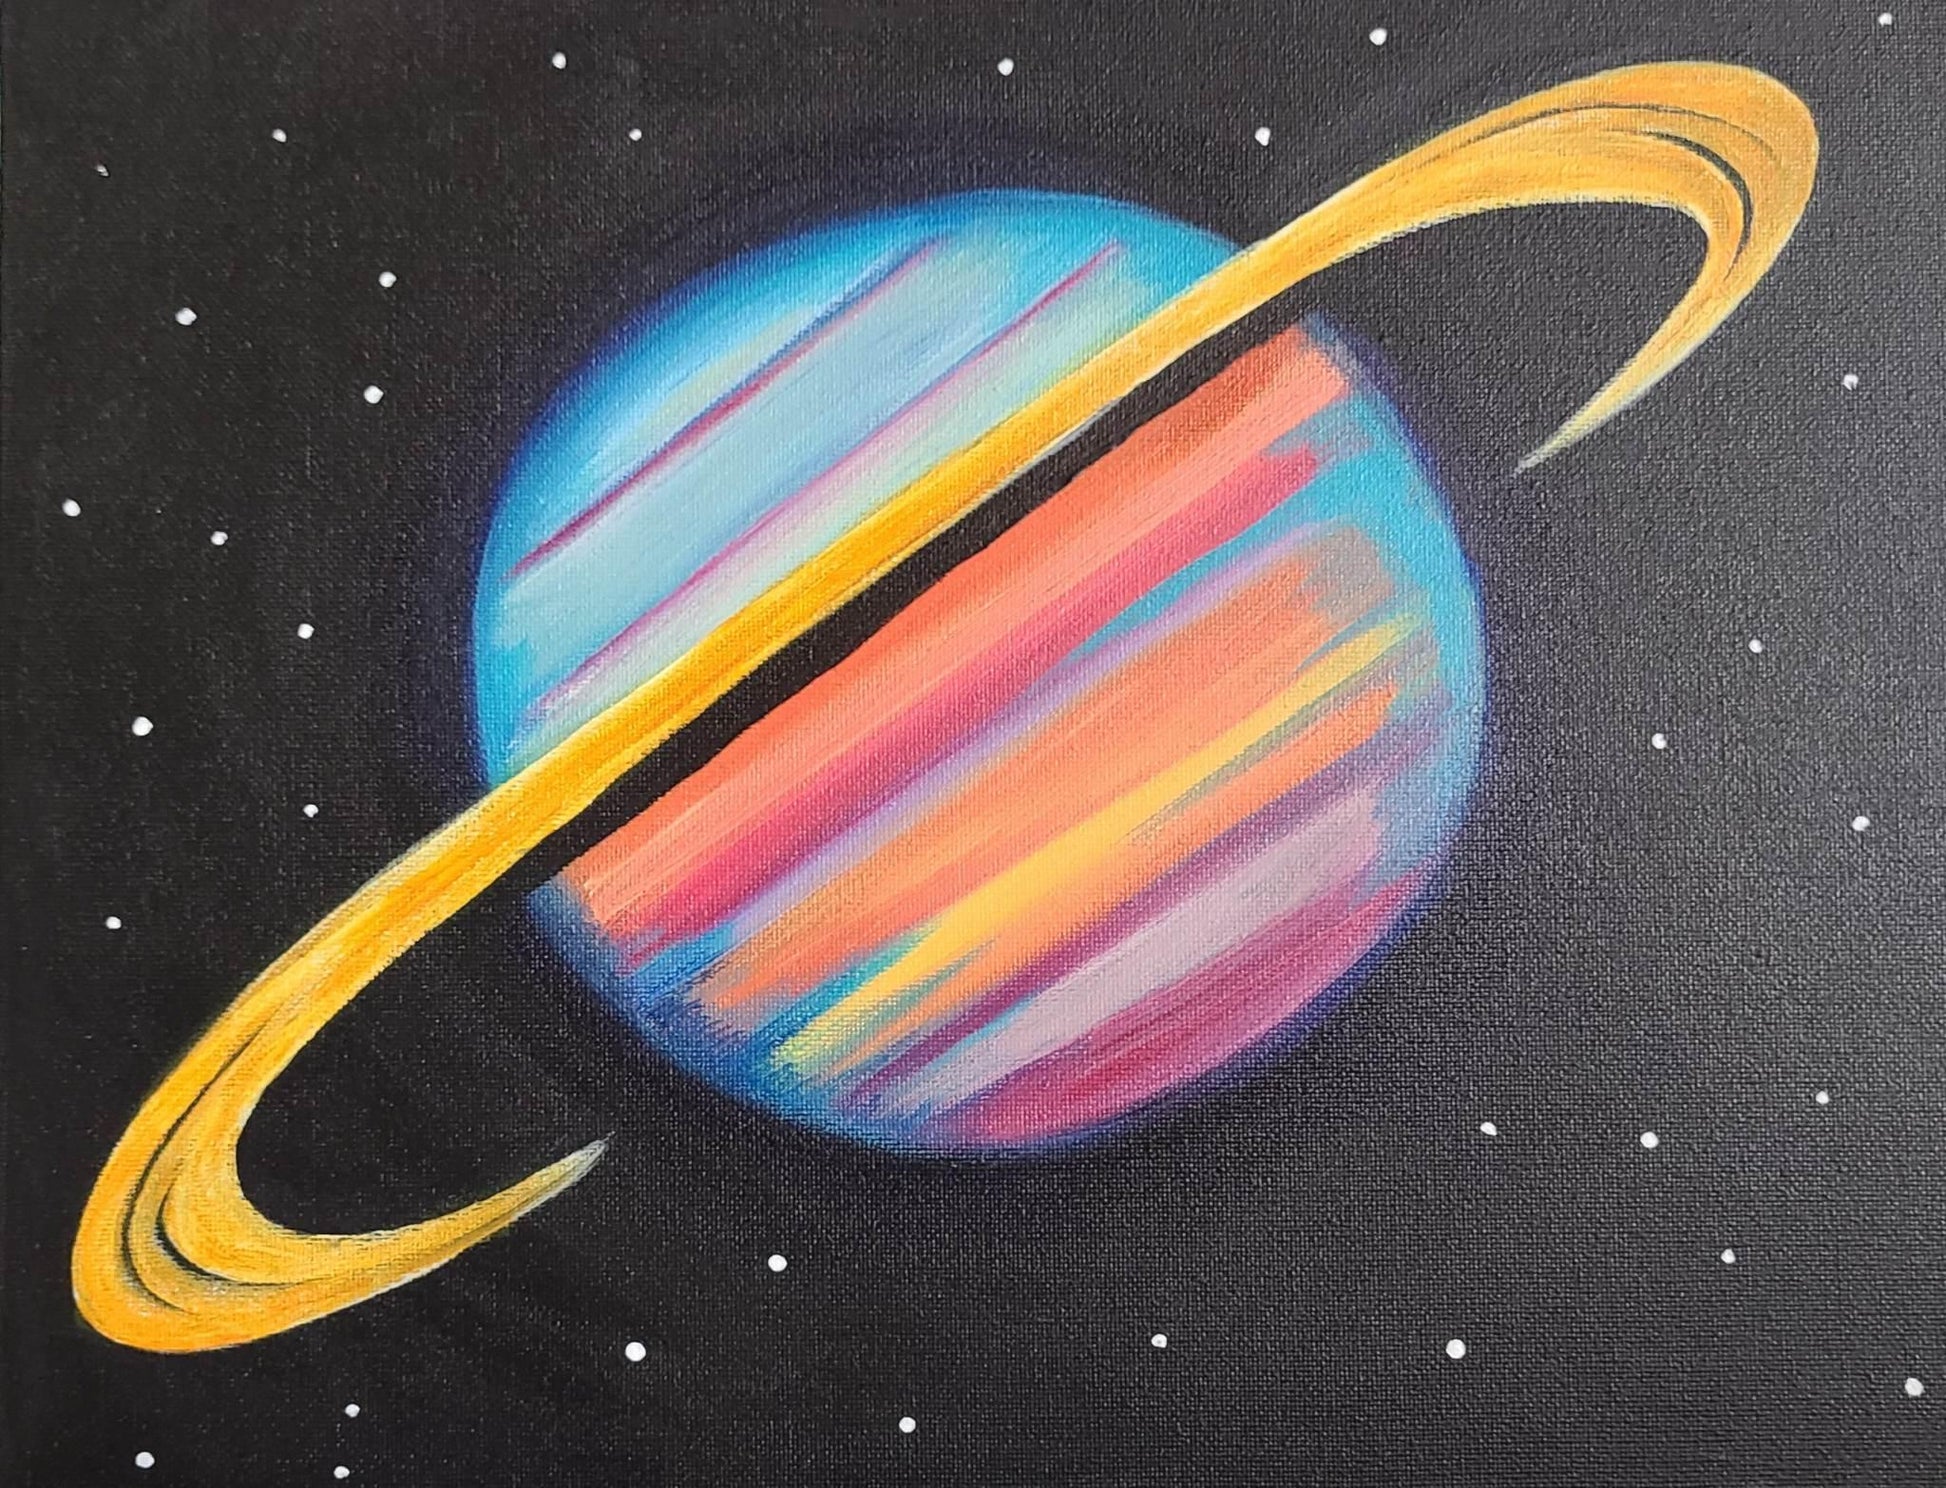 Saturn's Rings - Brush Tips Art Studio